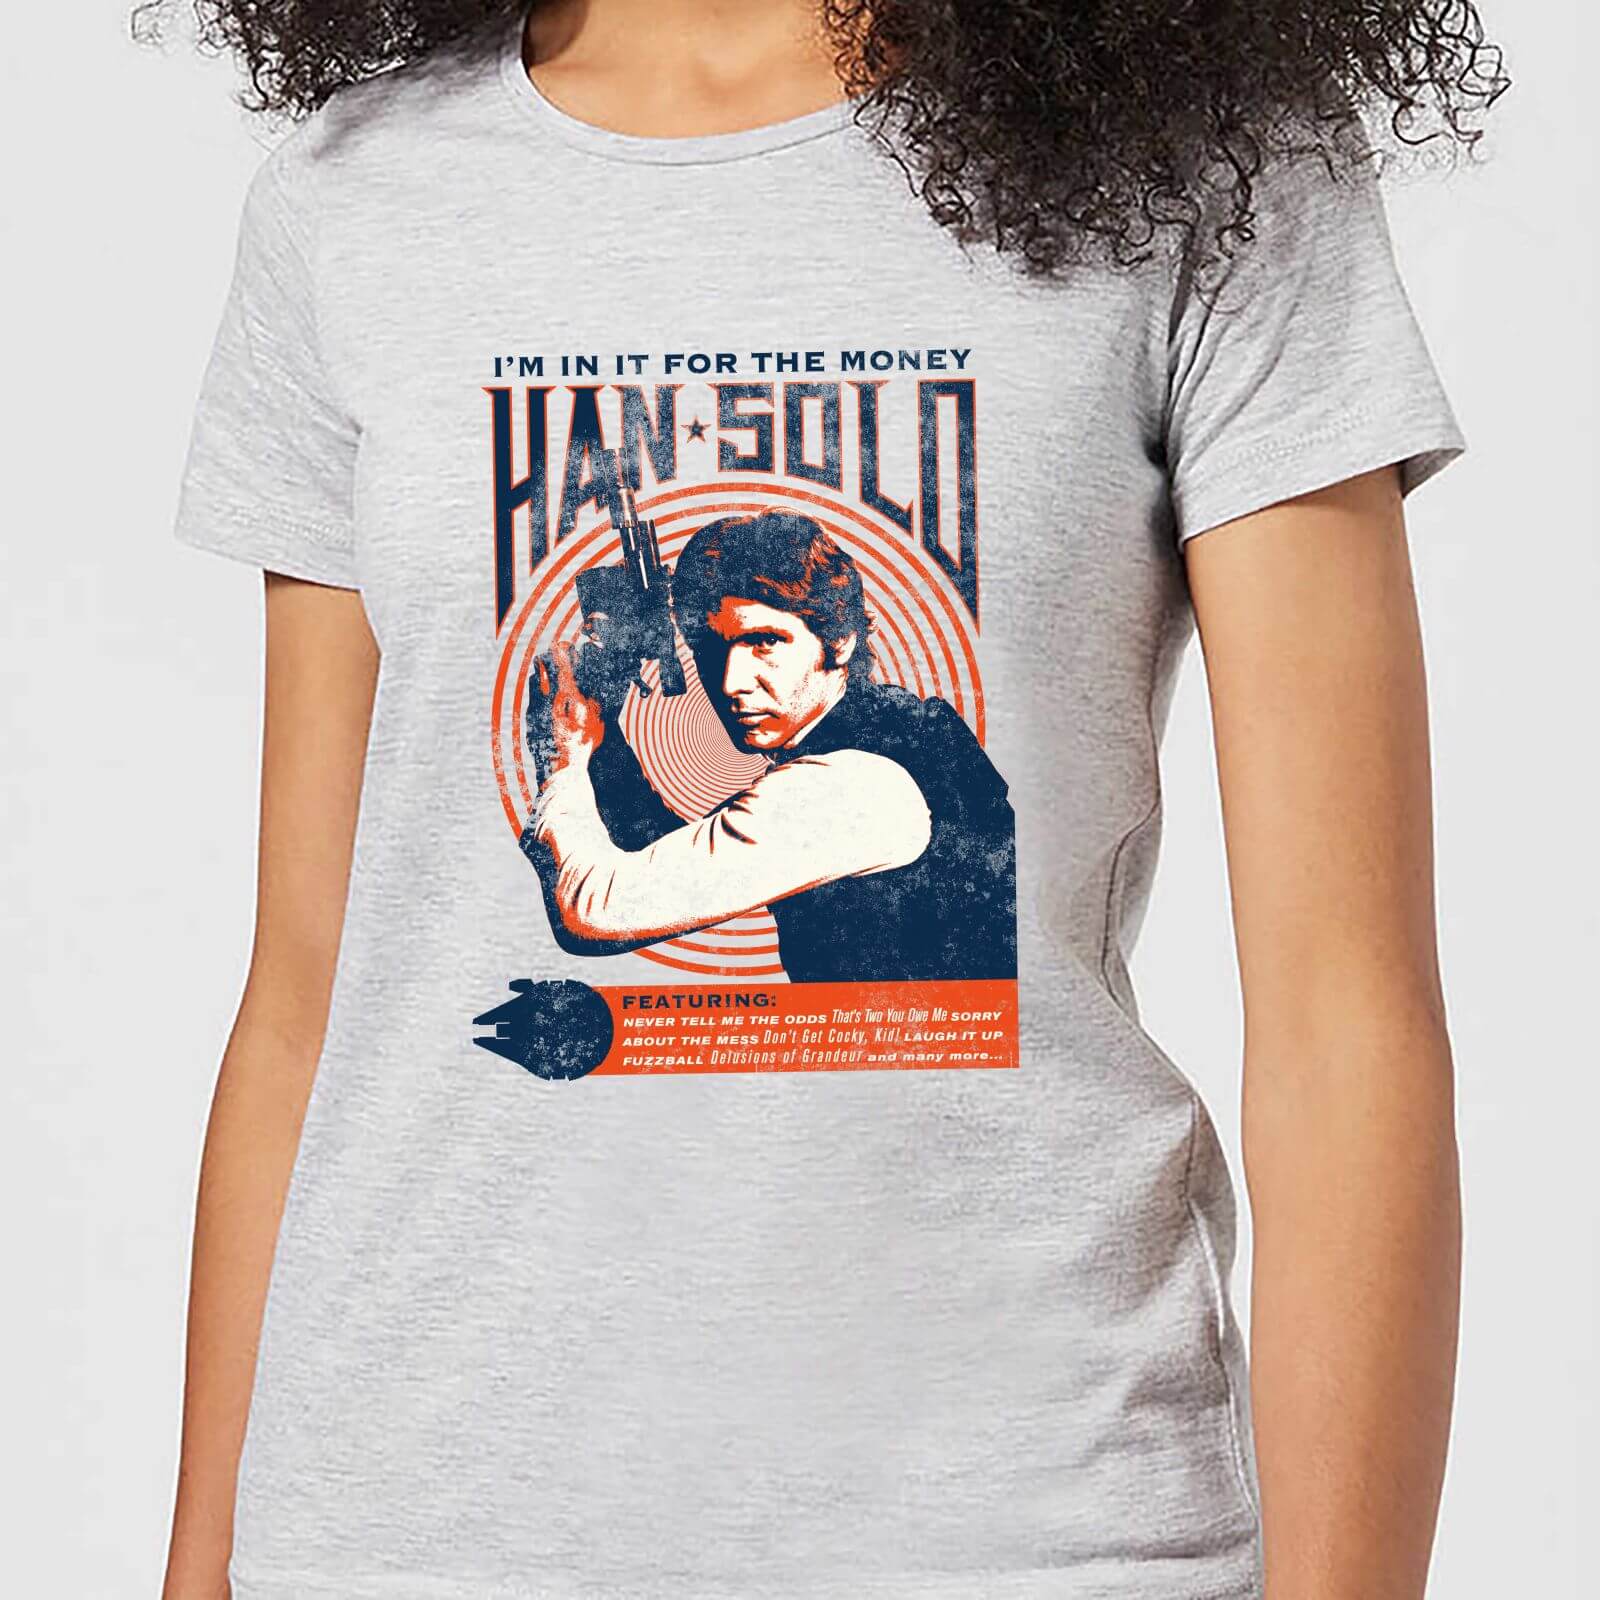 Star Wars Han Solo Retro Poster Women's T-Shirt - Grey - M - Grey